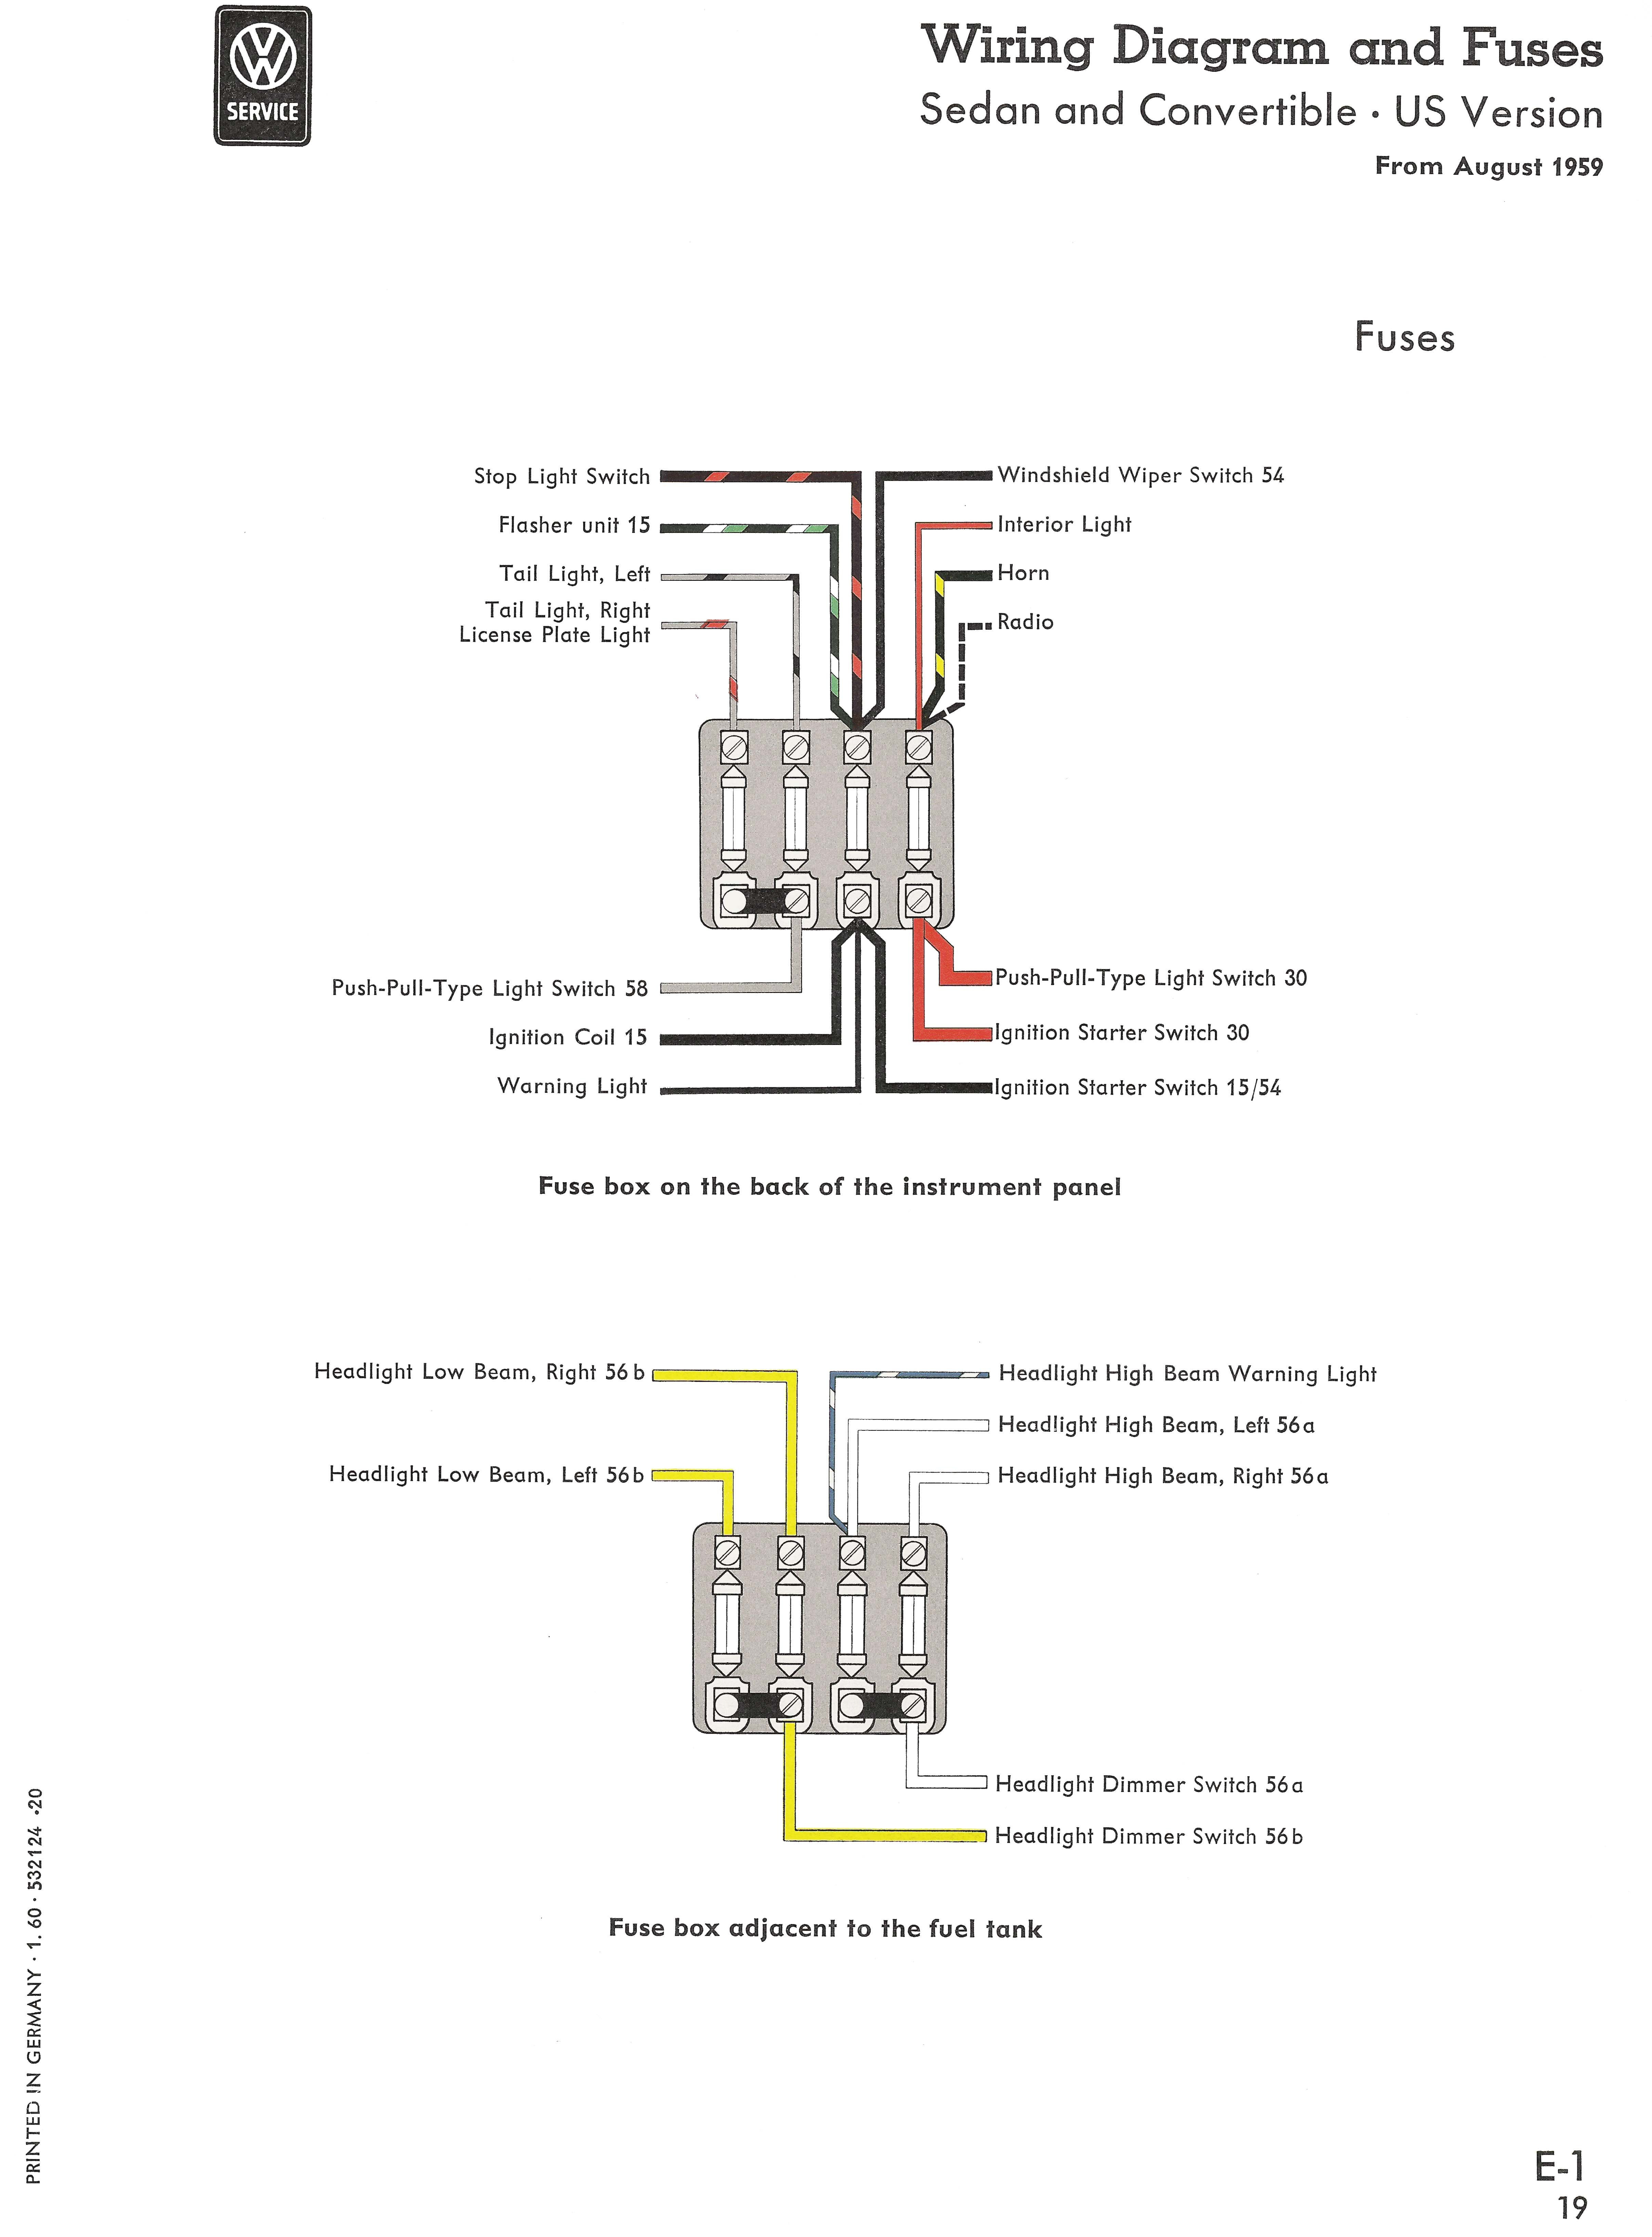 Mini Seat Belt Wiring Diagram thesamba.com :: Type 1 Wiring Diagrams Of Mini Seat Belt Wiring Diagram